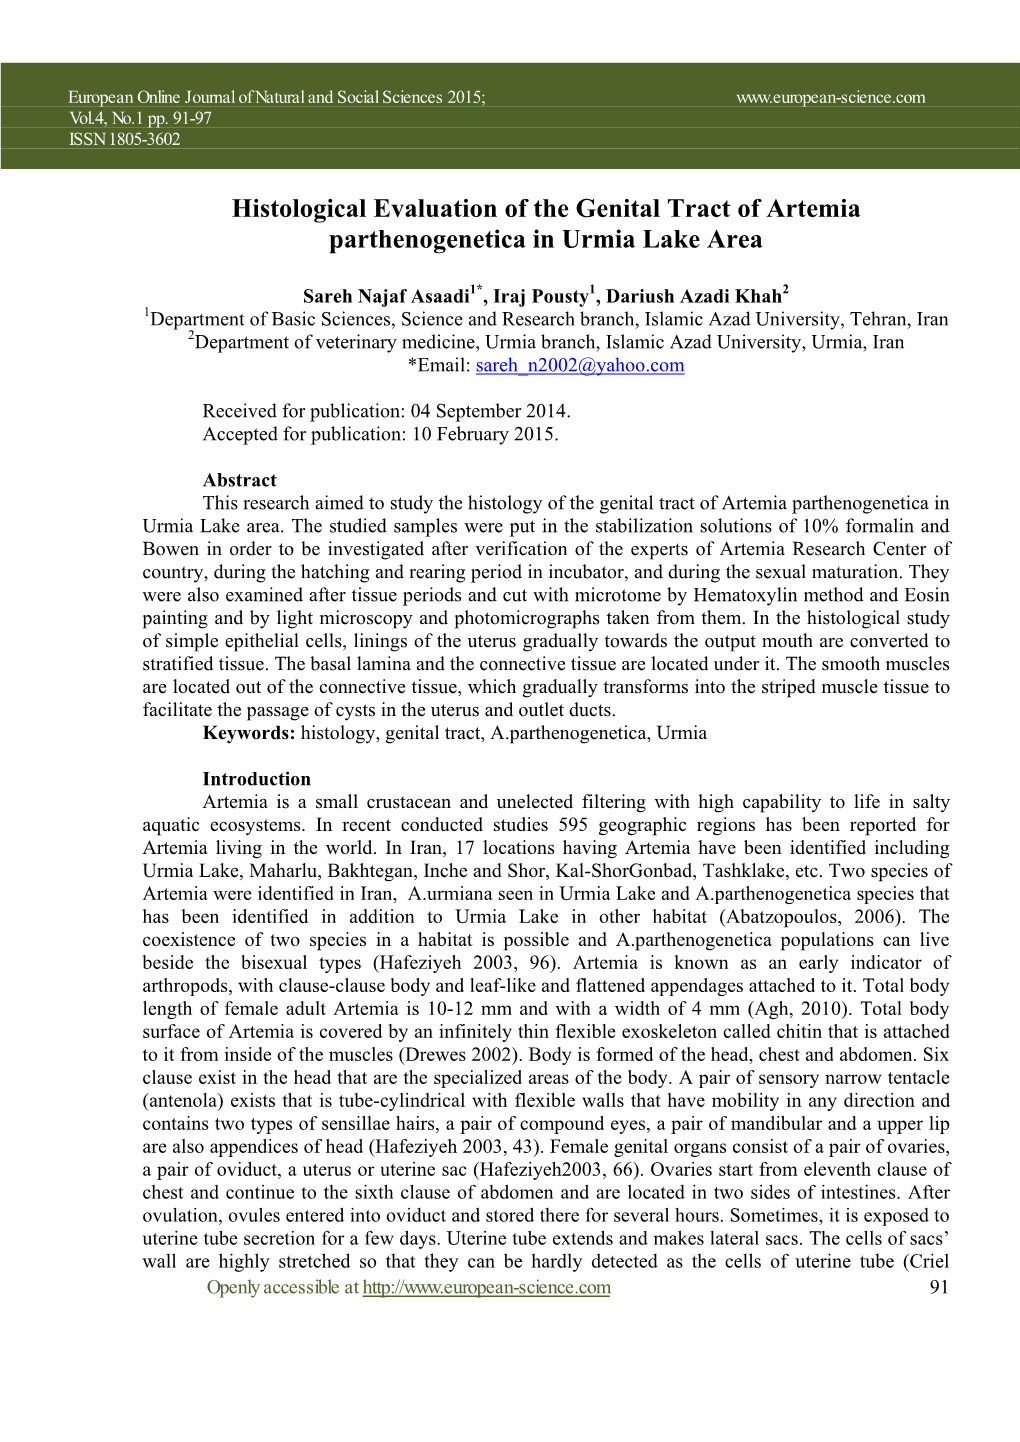 Histological Evaluation of the Genital Tract of Artemia Parthenogenetica in Urmia Lake Area